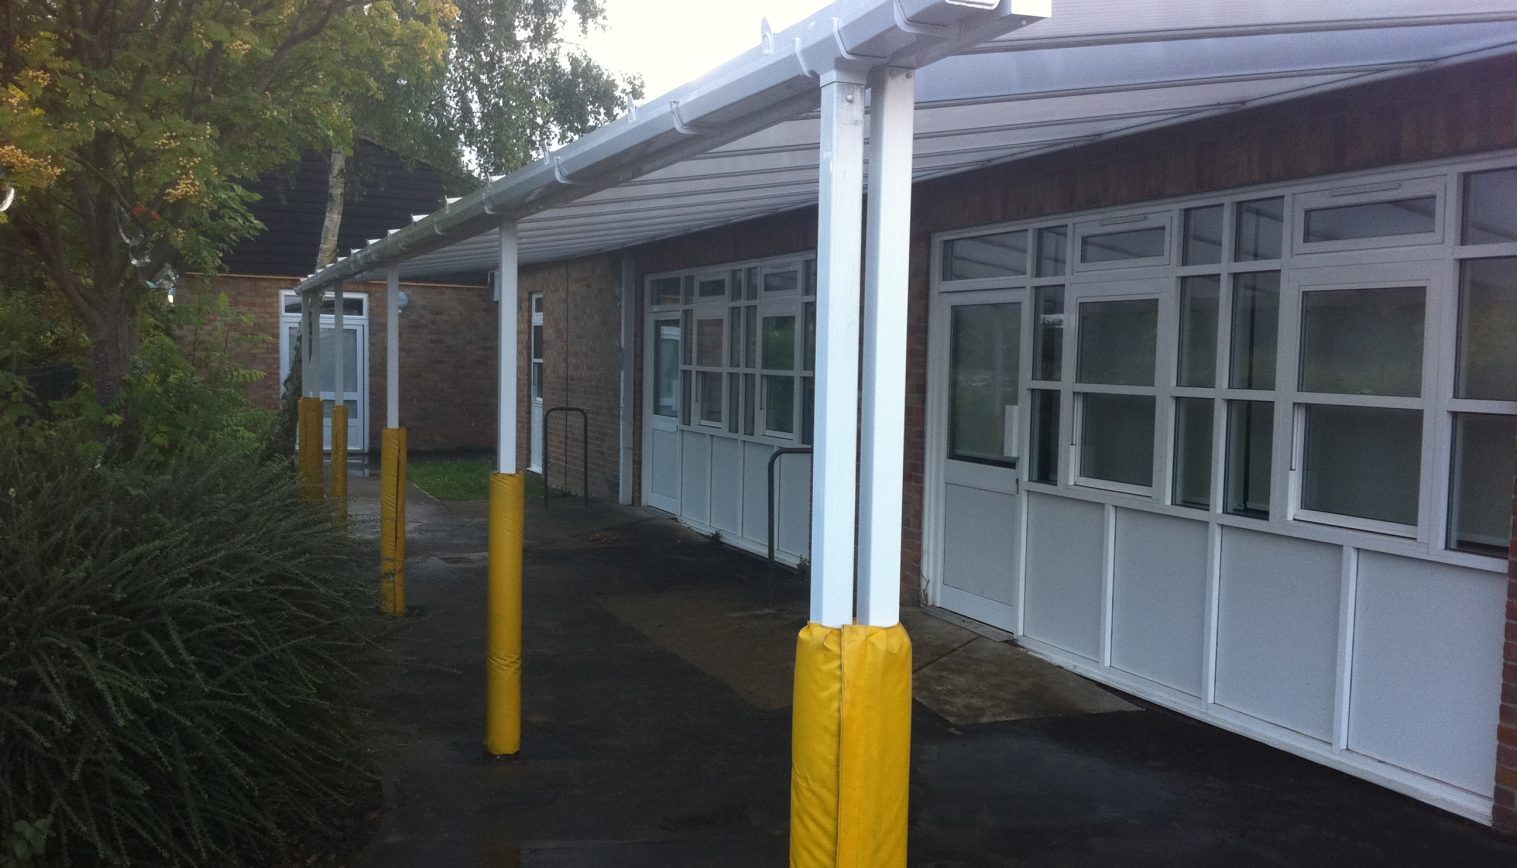 Milestone School – 2nd Wall mounted canopy